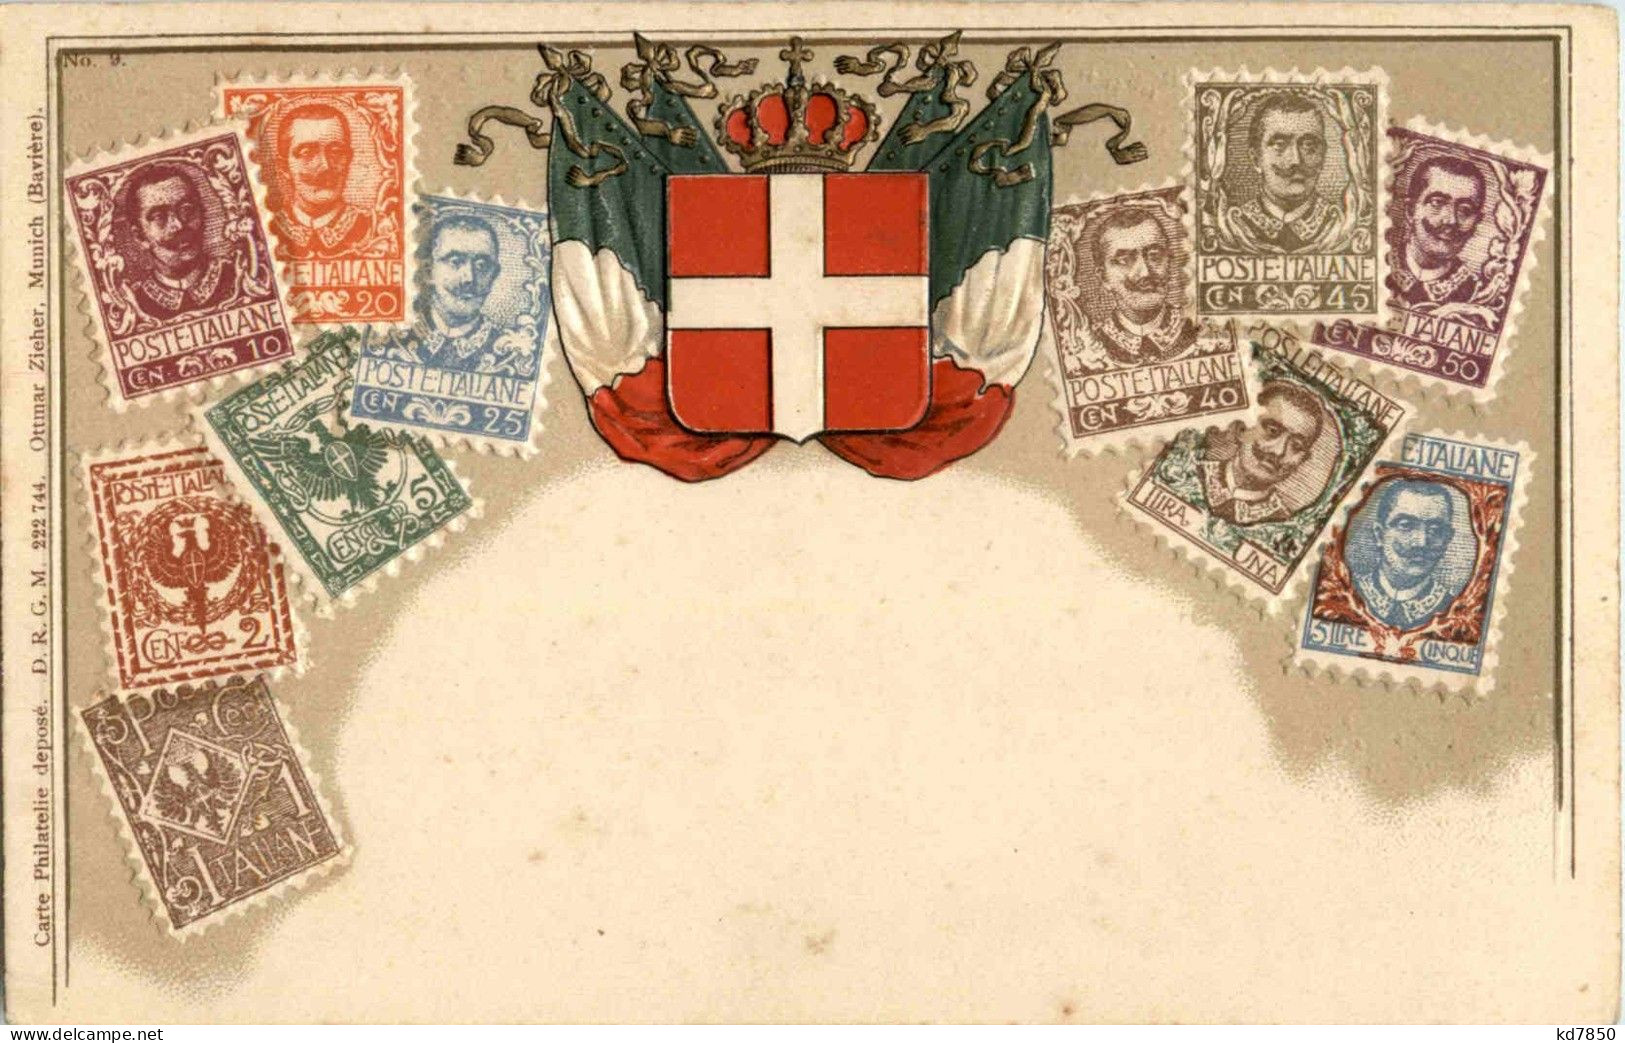 Italy - Briefmarken - Stamps - Prägekarte - Stamps (pictures)